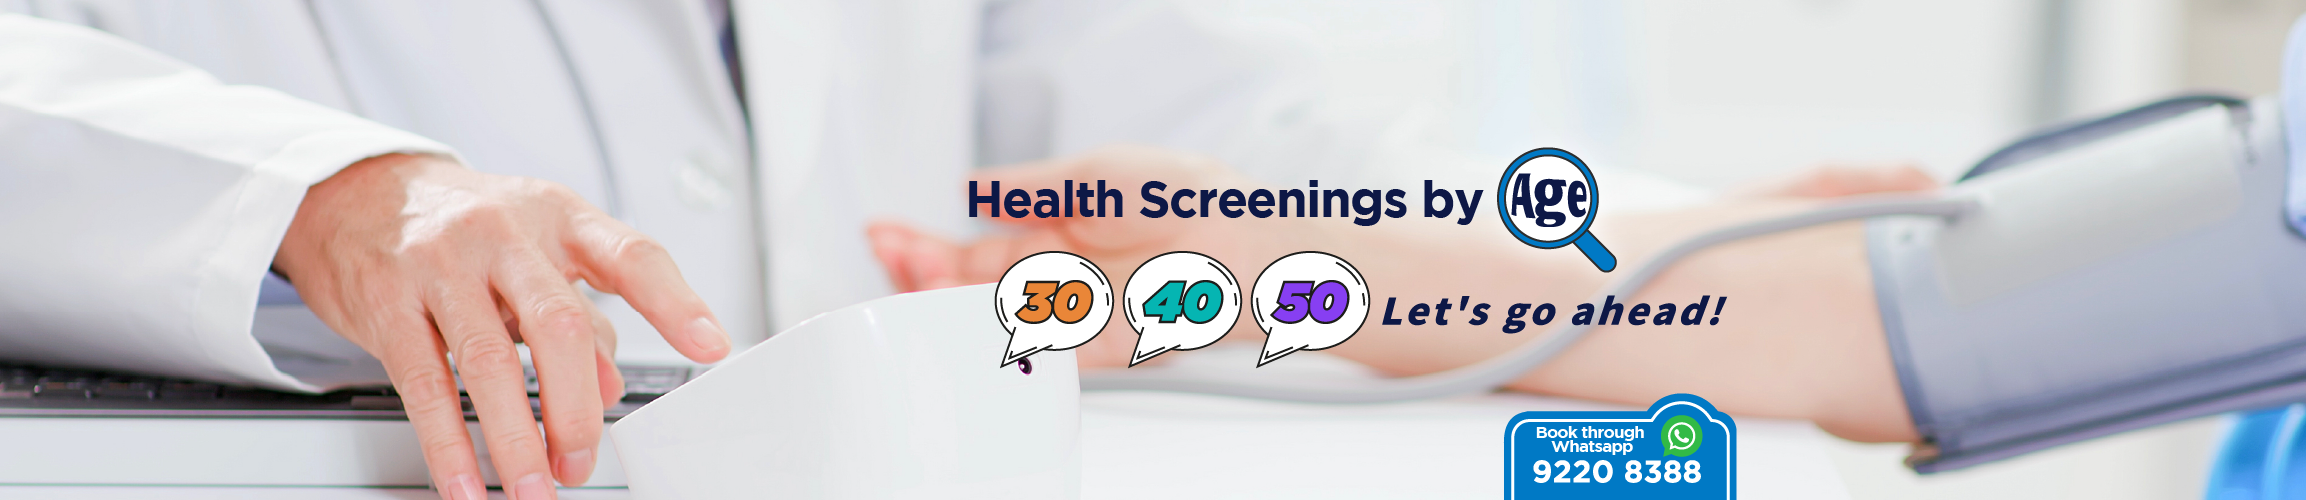 Health Screenings by Age banner